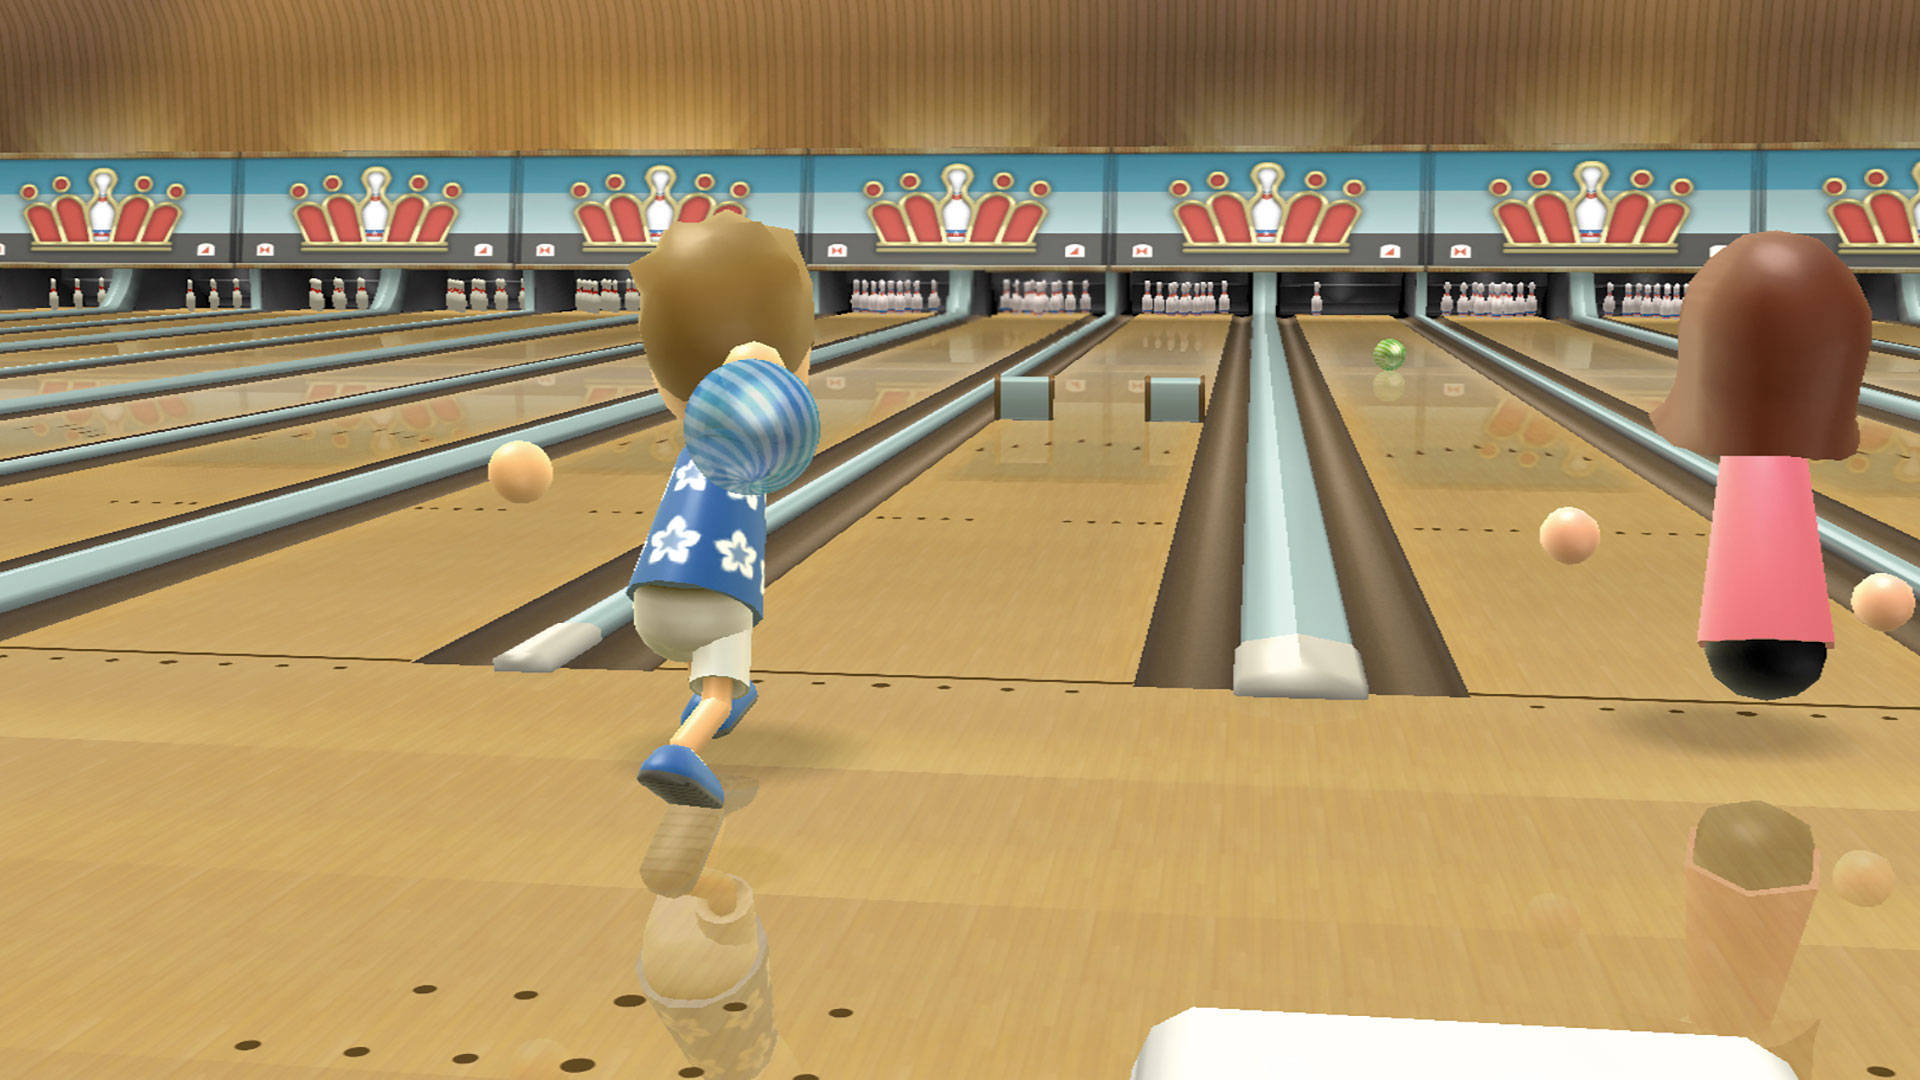 Wii Sports Resort Bowling Game Wallpaper